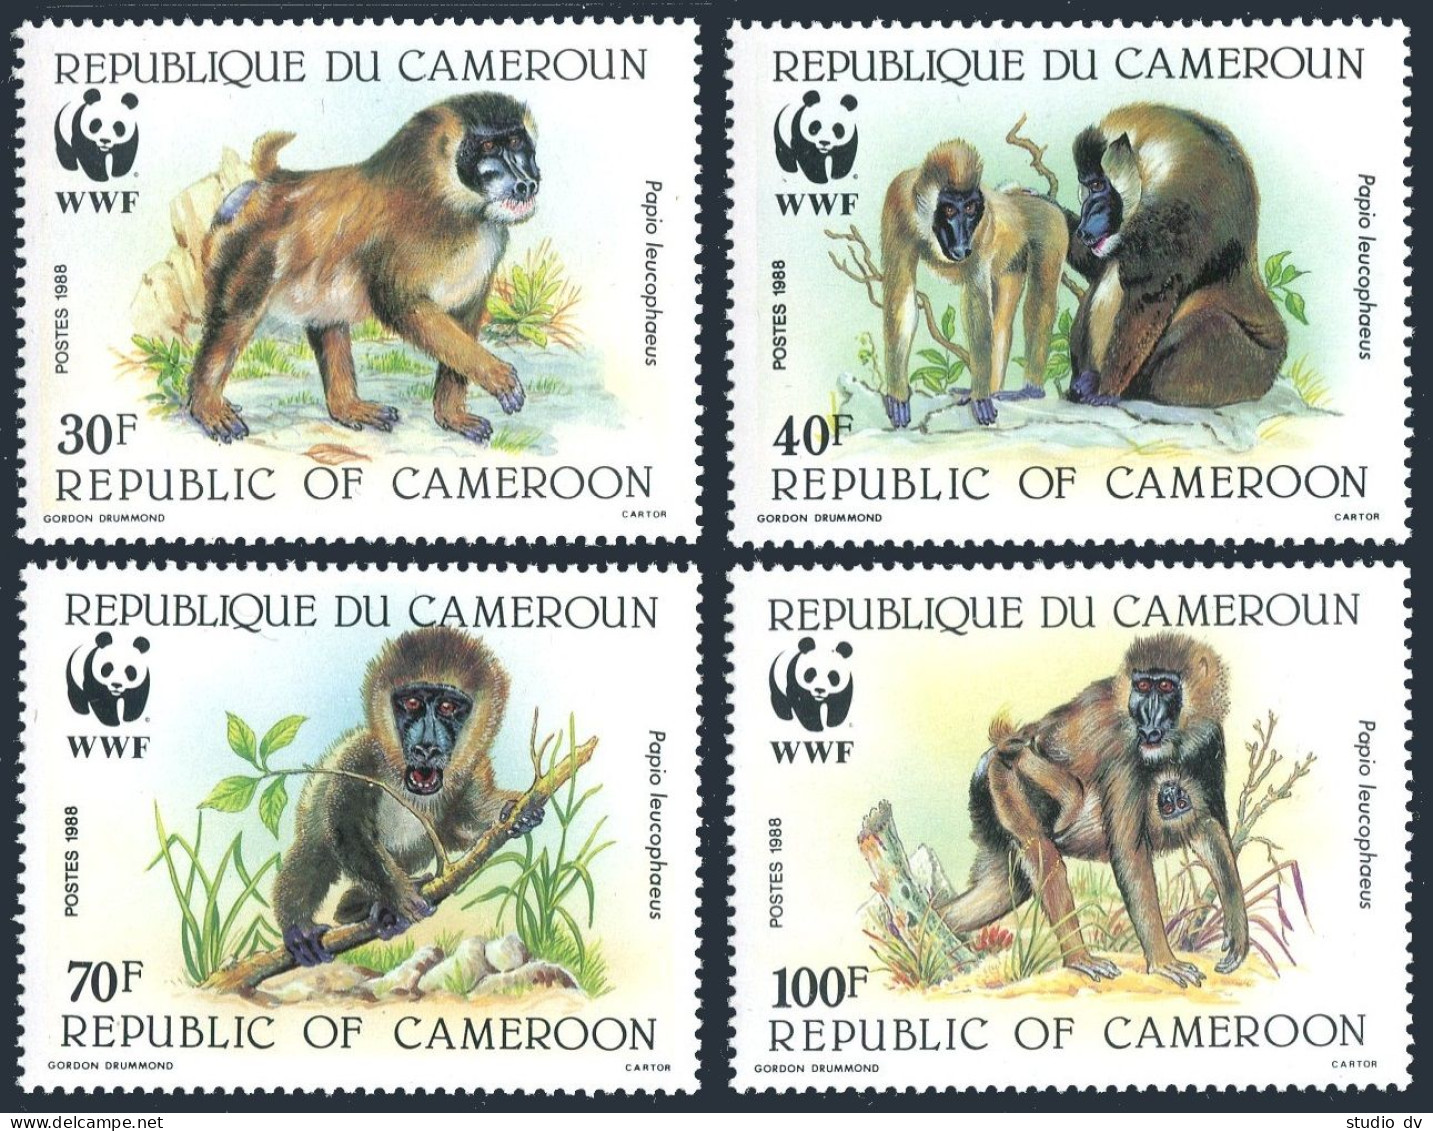 Cameroun 843-846, MNH. Michel 1155-1158. WWF 1988. Baboons. - Kamerun (1960-...)